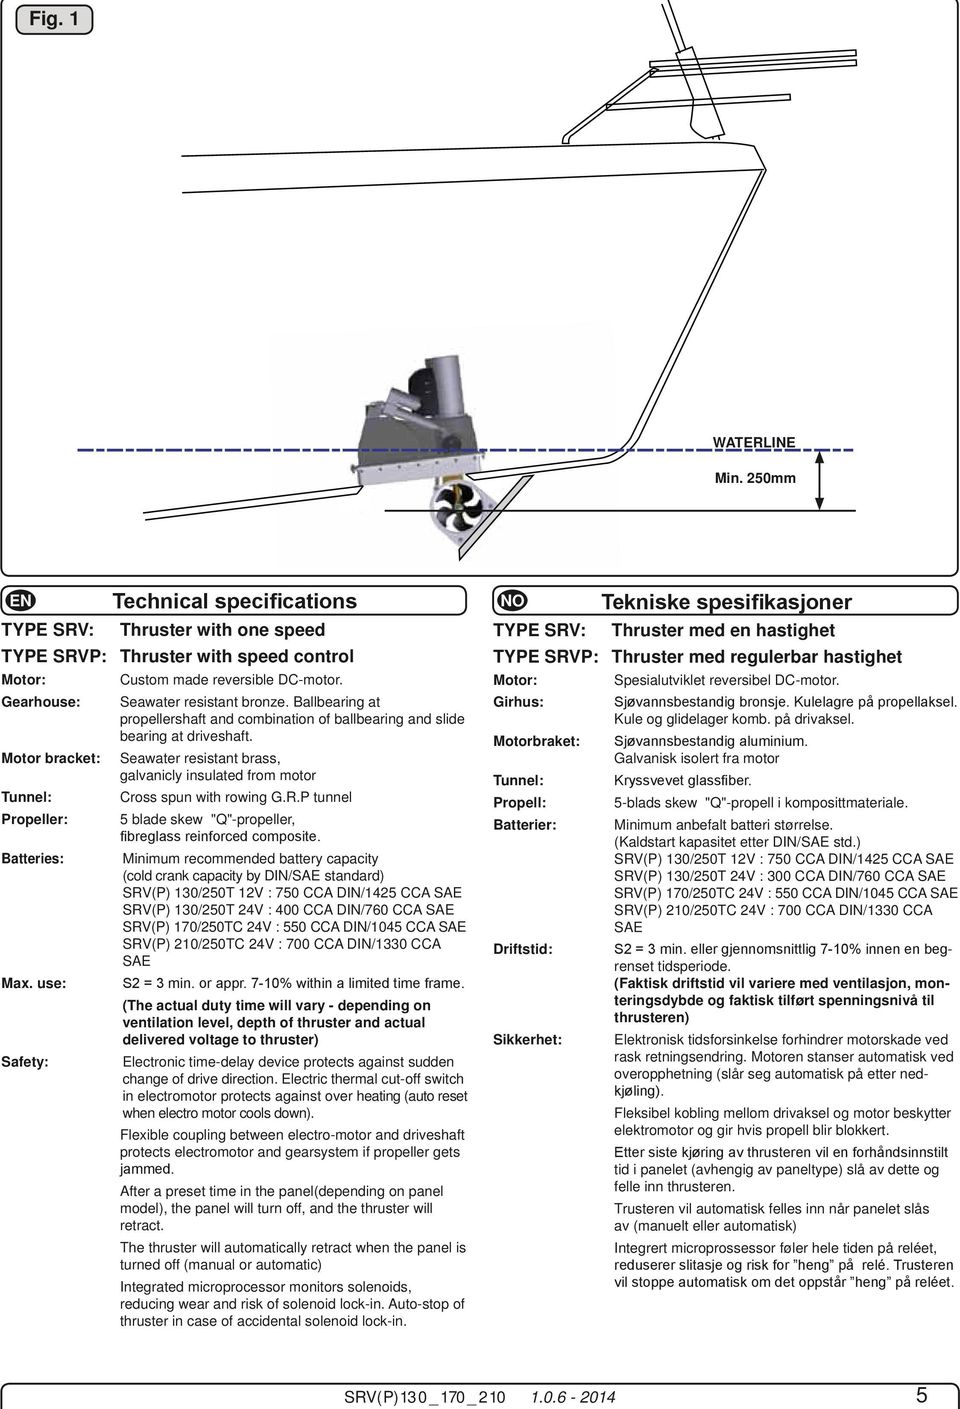 R.P tunnel Propeller: 5 blade skew "Q"-propeller, Batteries: Minimum recommended battery capacity (cold crank capacity by DIN/SAE standard) SRV(P) 130/250T 12V : 750 CCA DIN/1425 CCA SAE SRV(P)